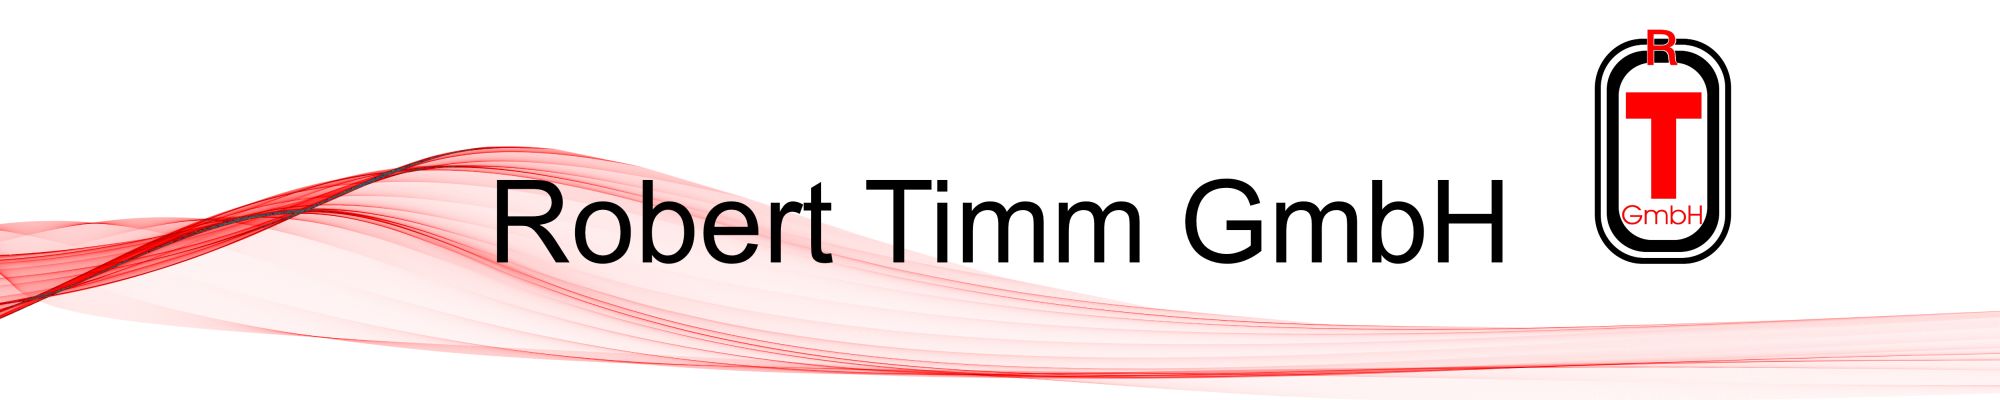 Robert Timm GmbH